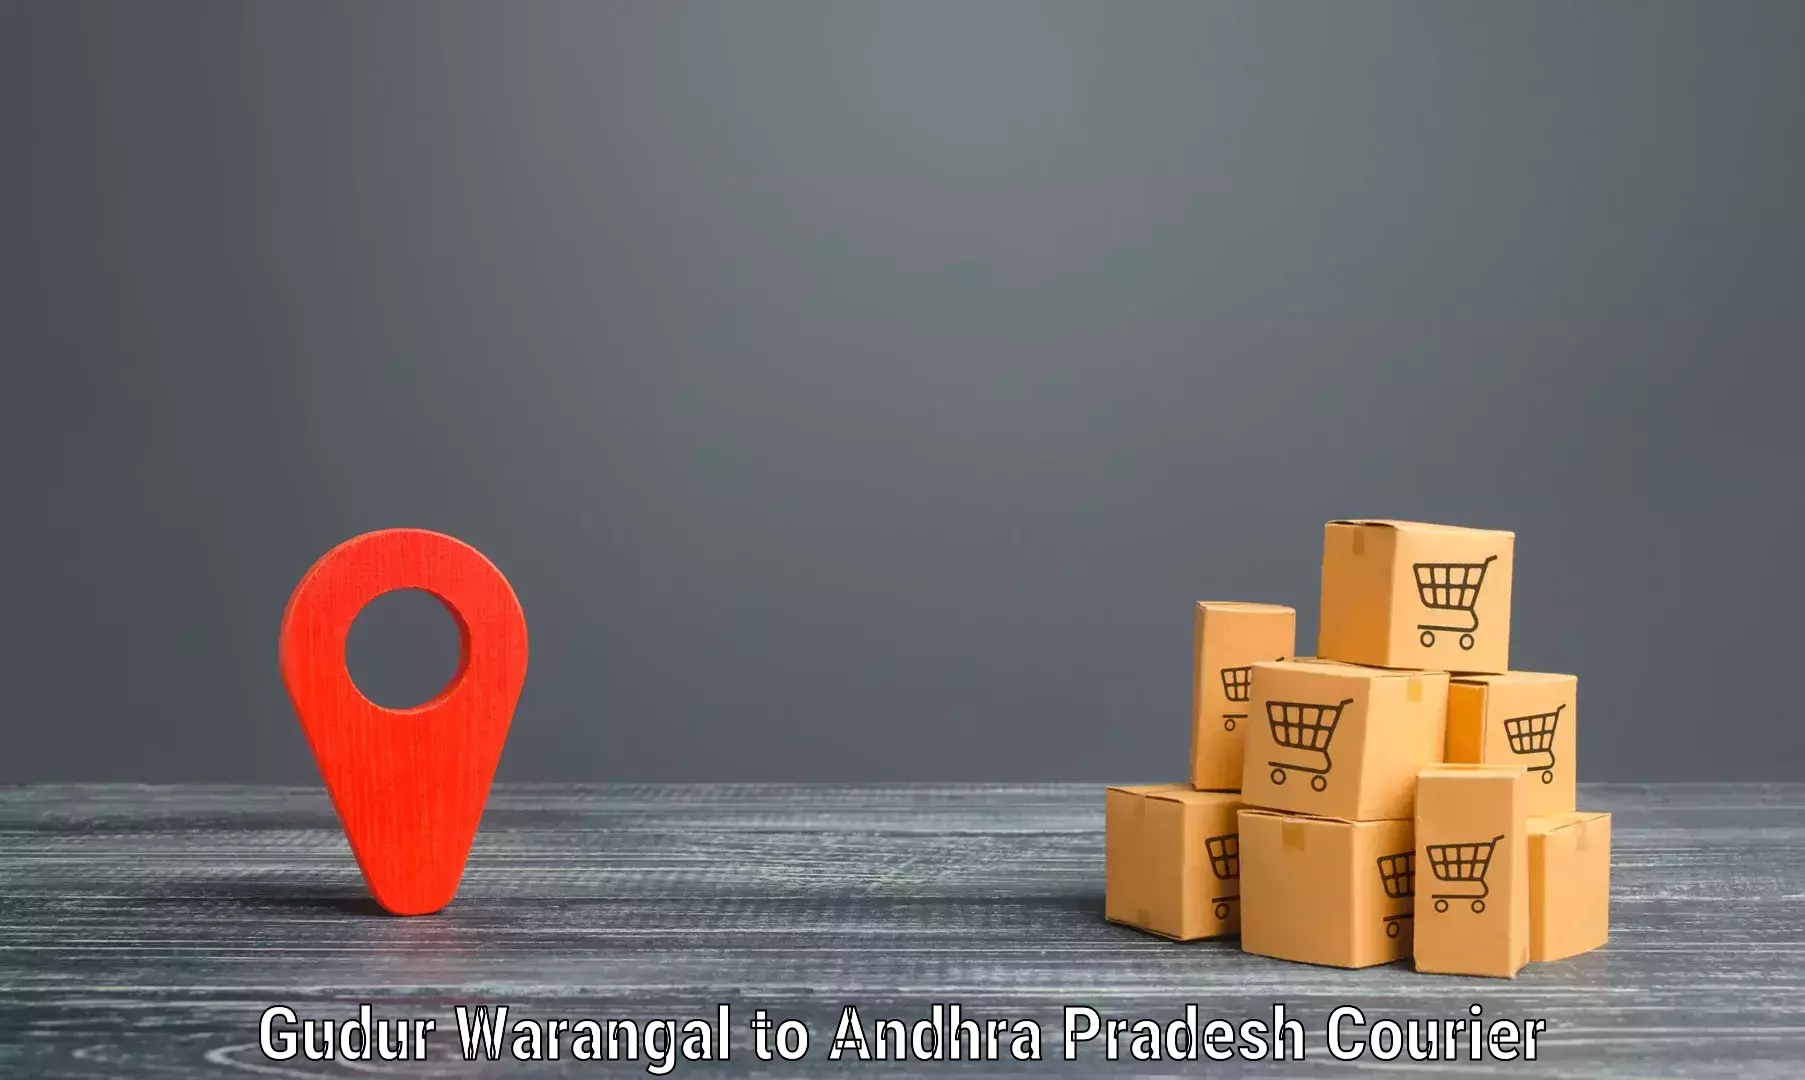 Easy access courier services Gudur Warangal to Sri City